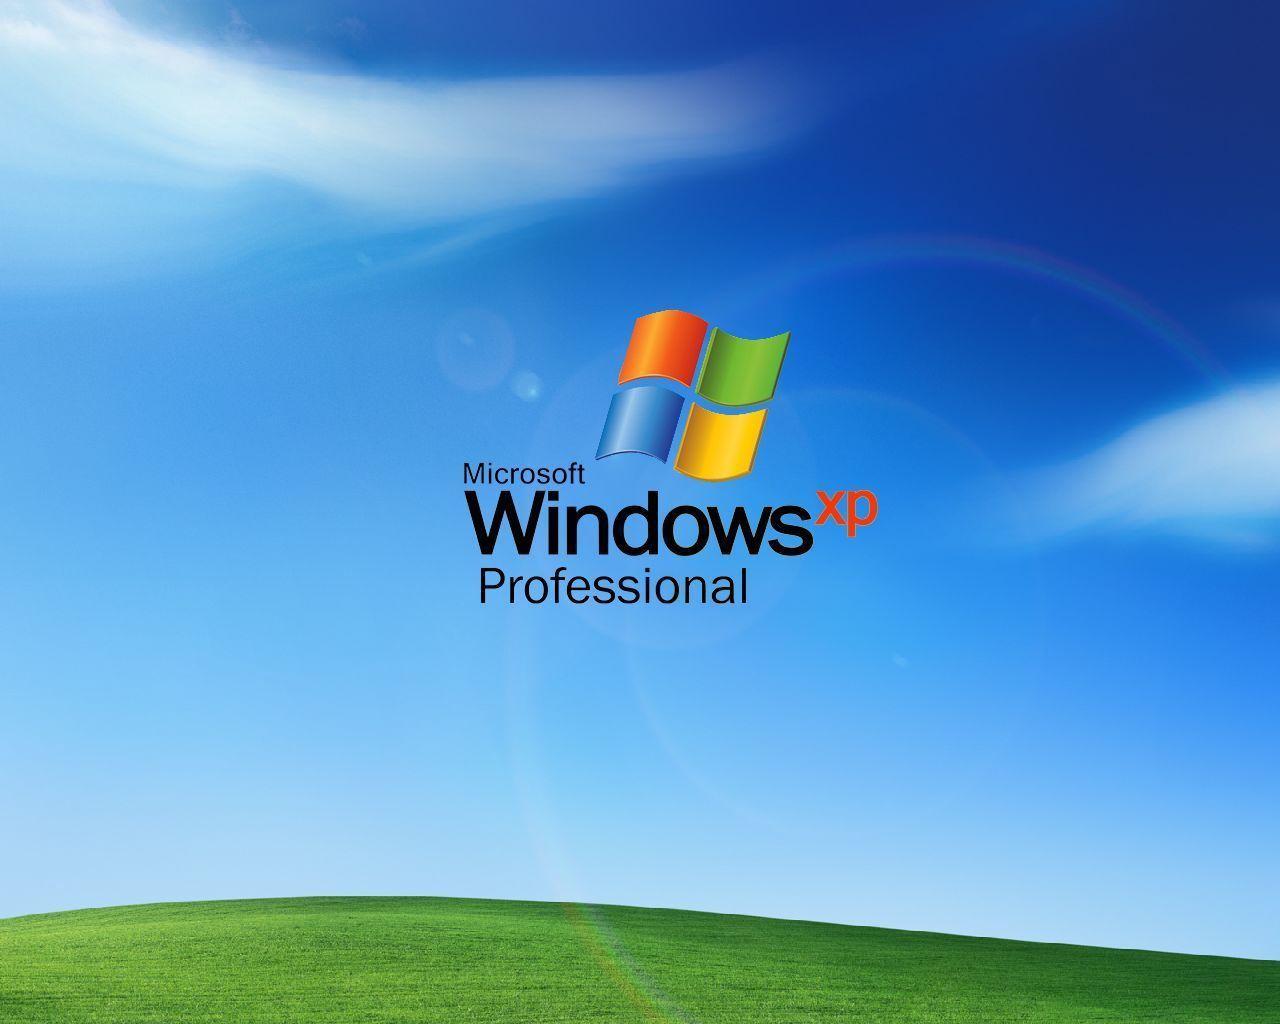 Important Notice for CenterEdge Users regarding Windows XP